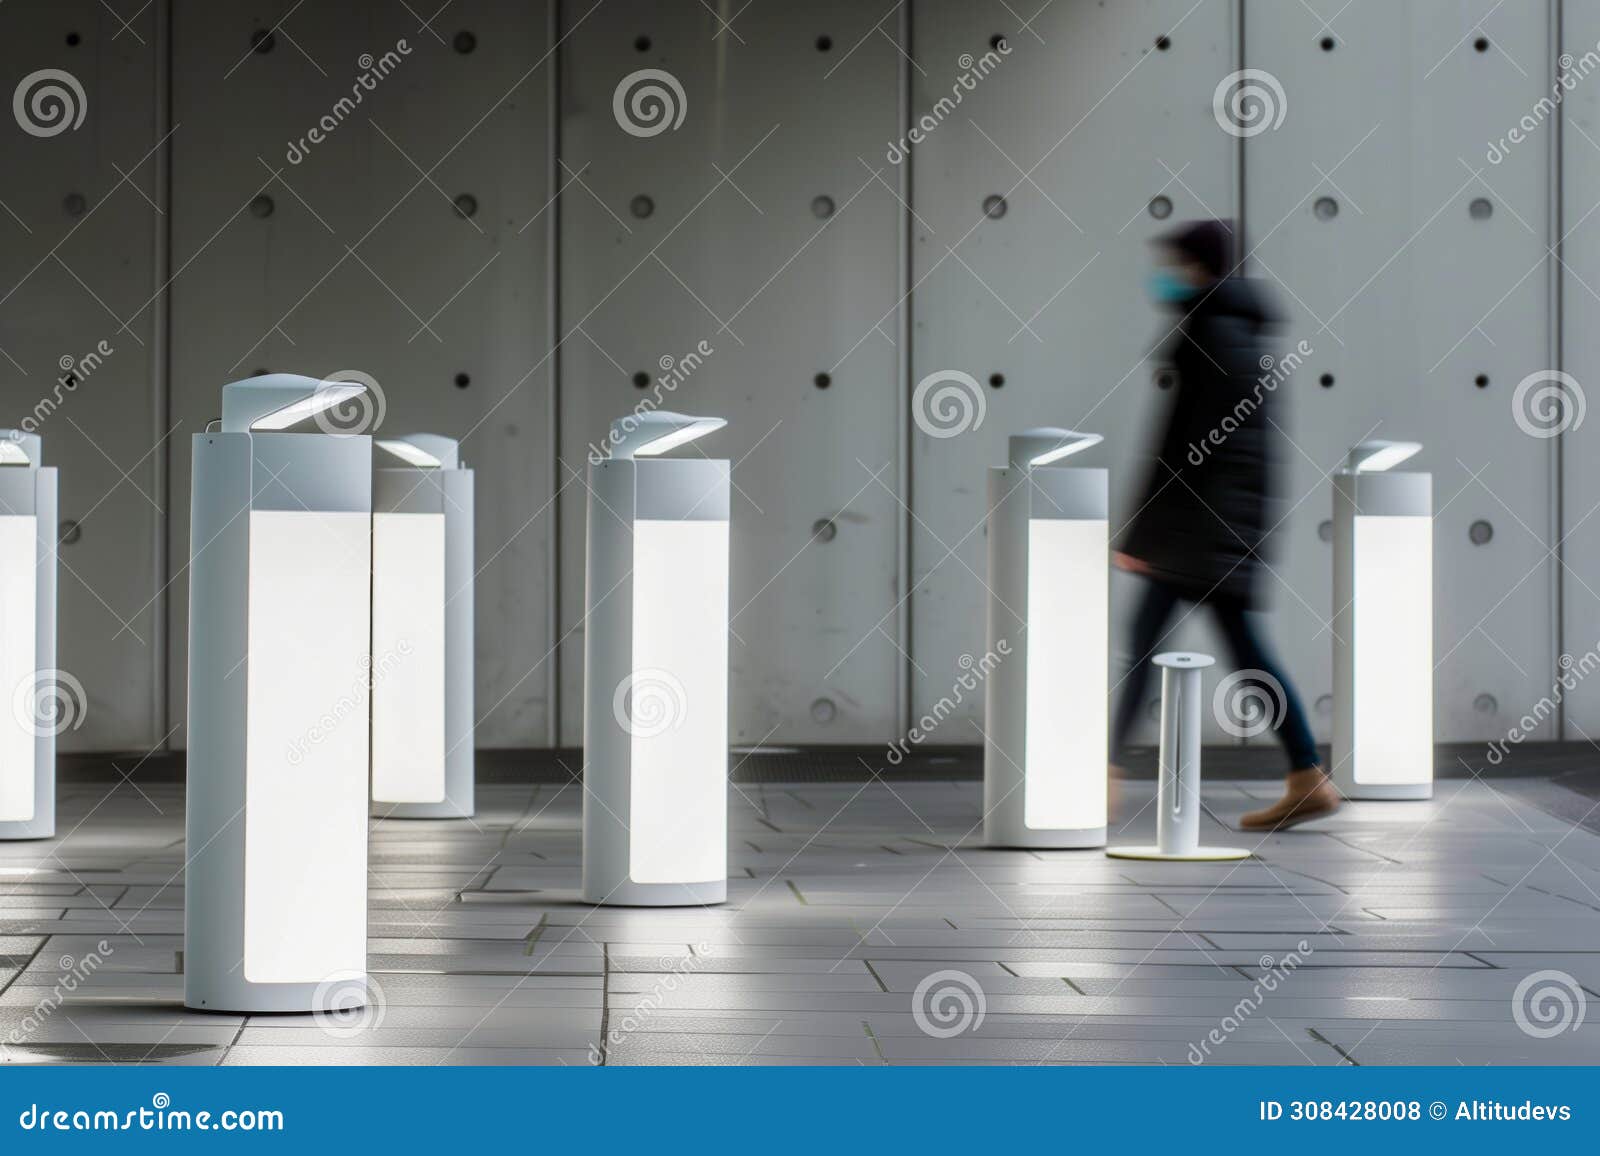 person walking past a series of white, sleek, energyefficient light fixtures